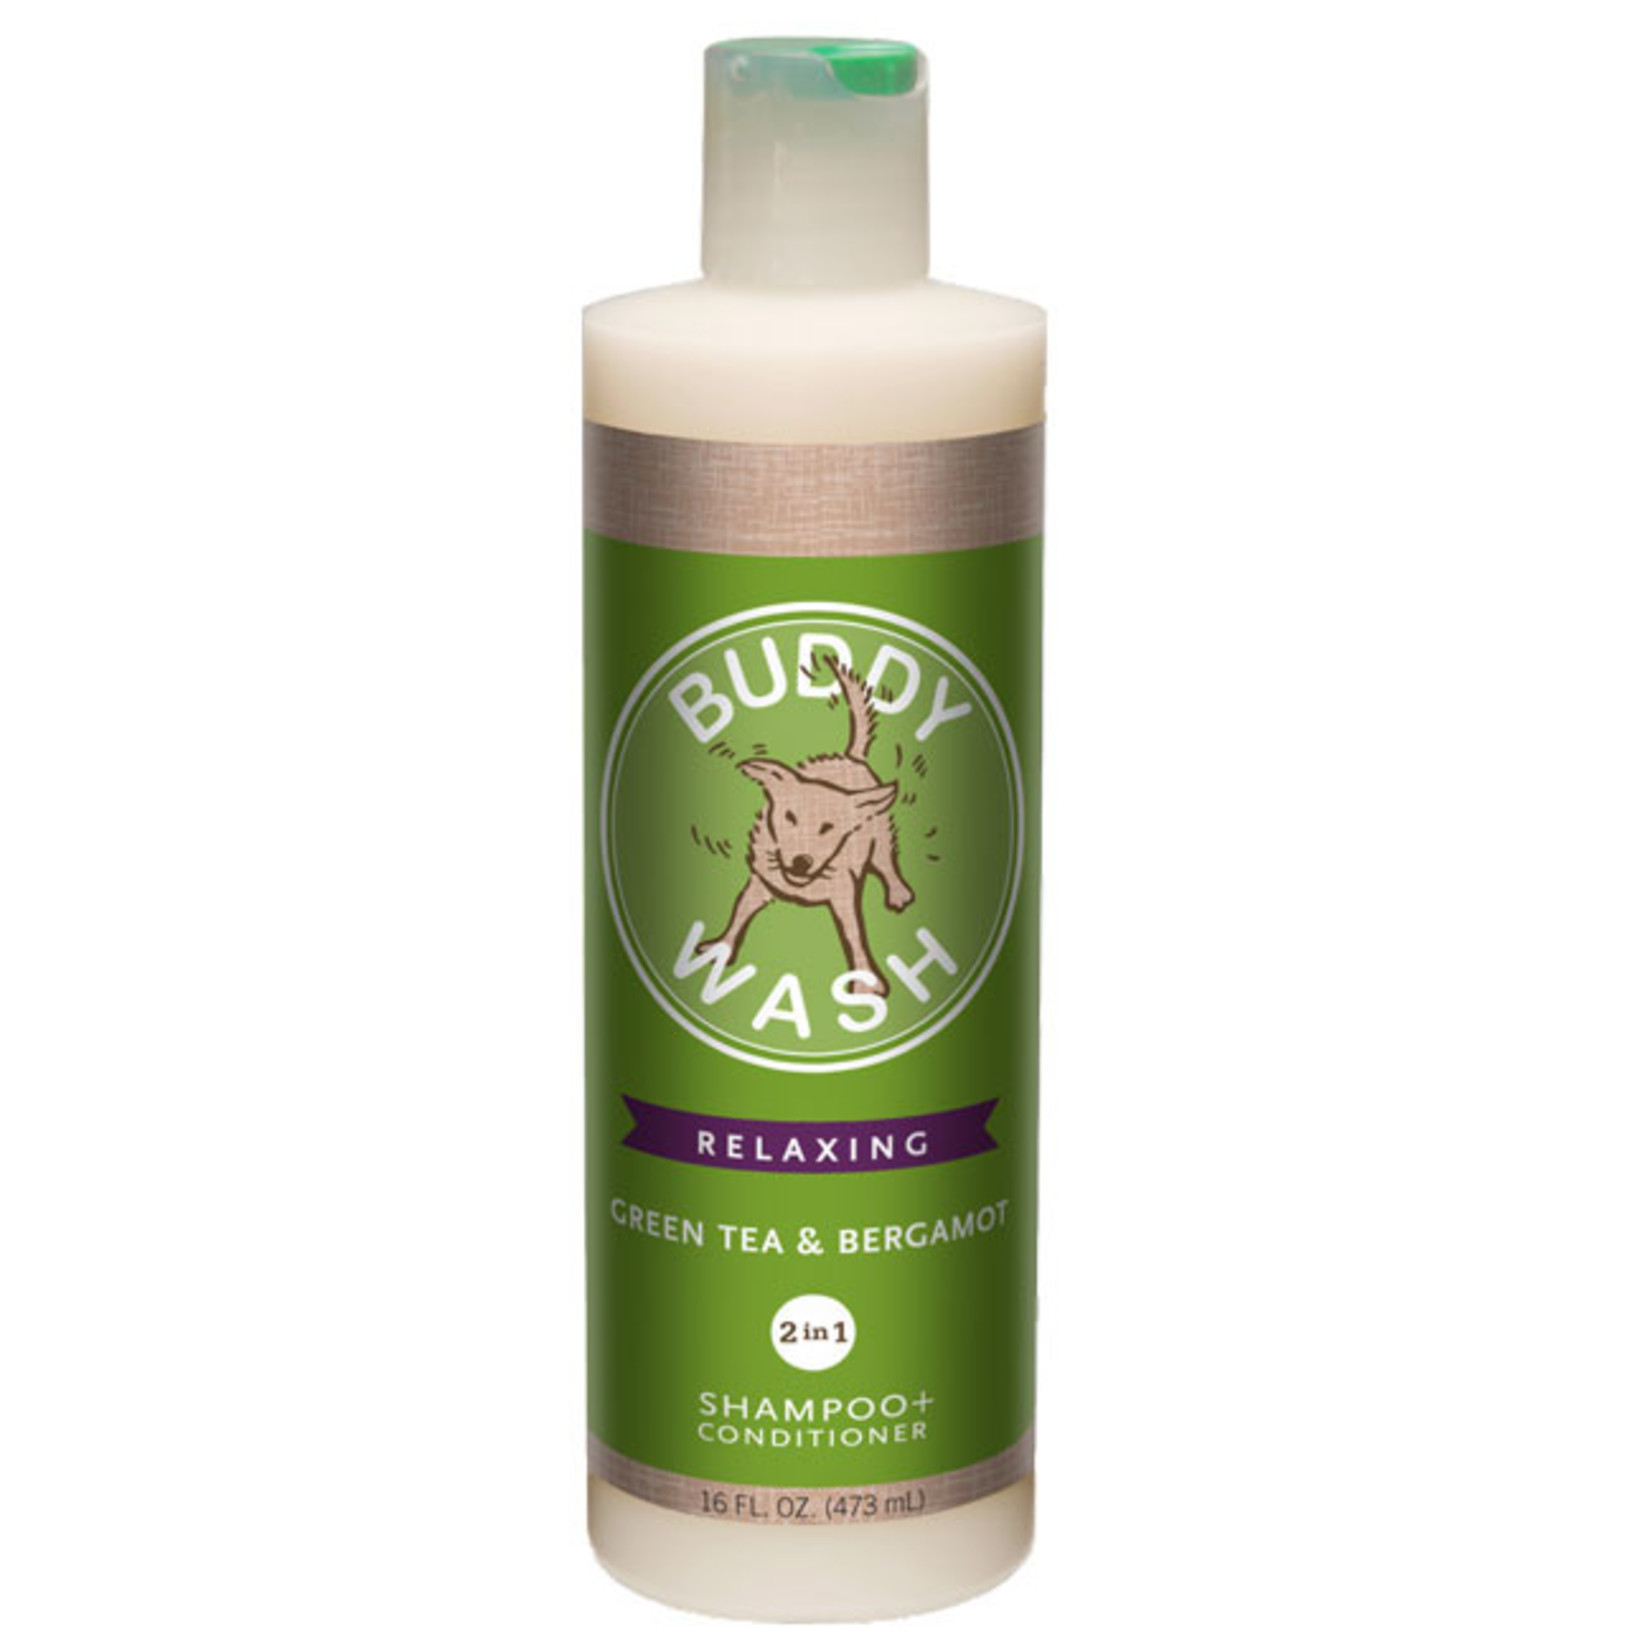 Cloud Star Buddy Wash 2-in-1 Green Tea & Bergamot Shampoo & Conditioner for Dogs 16oz